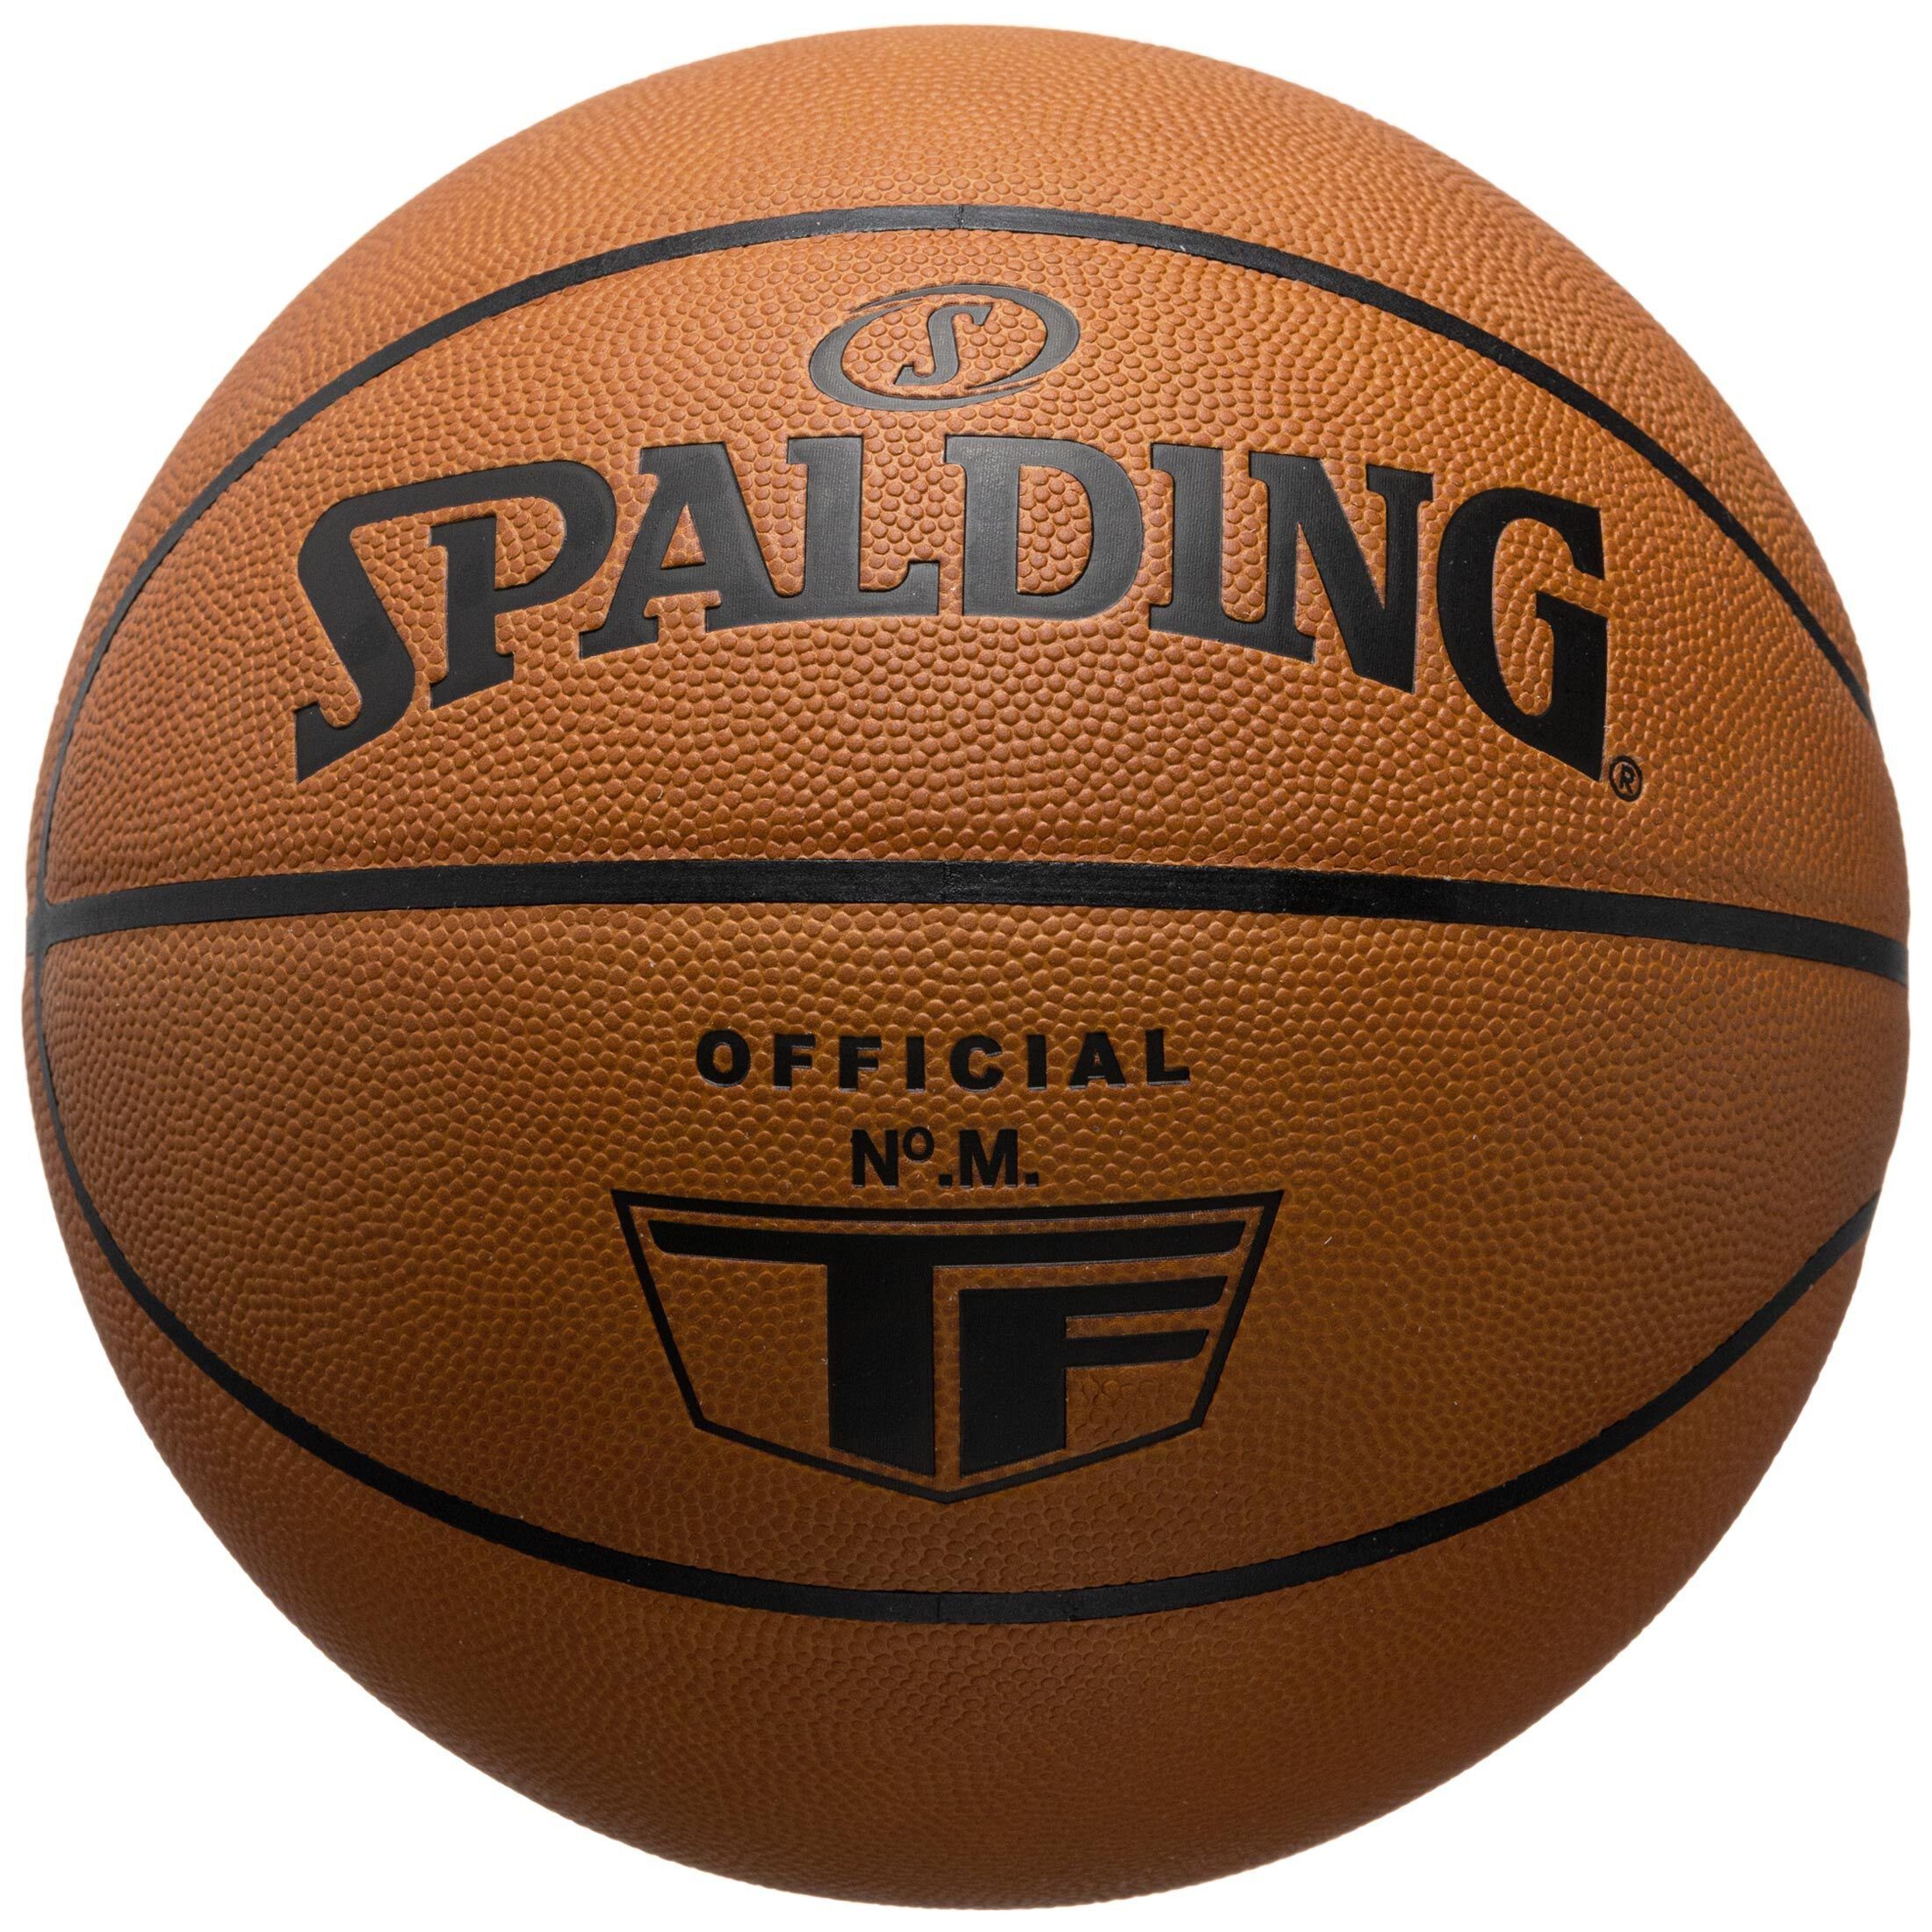 Spalding Basketball TF Leather Model M Basketball